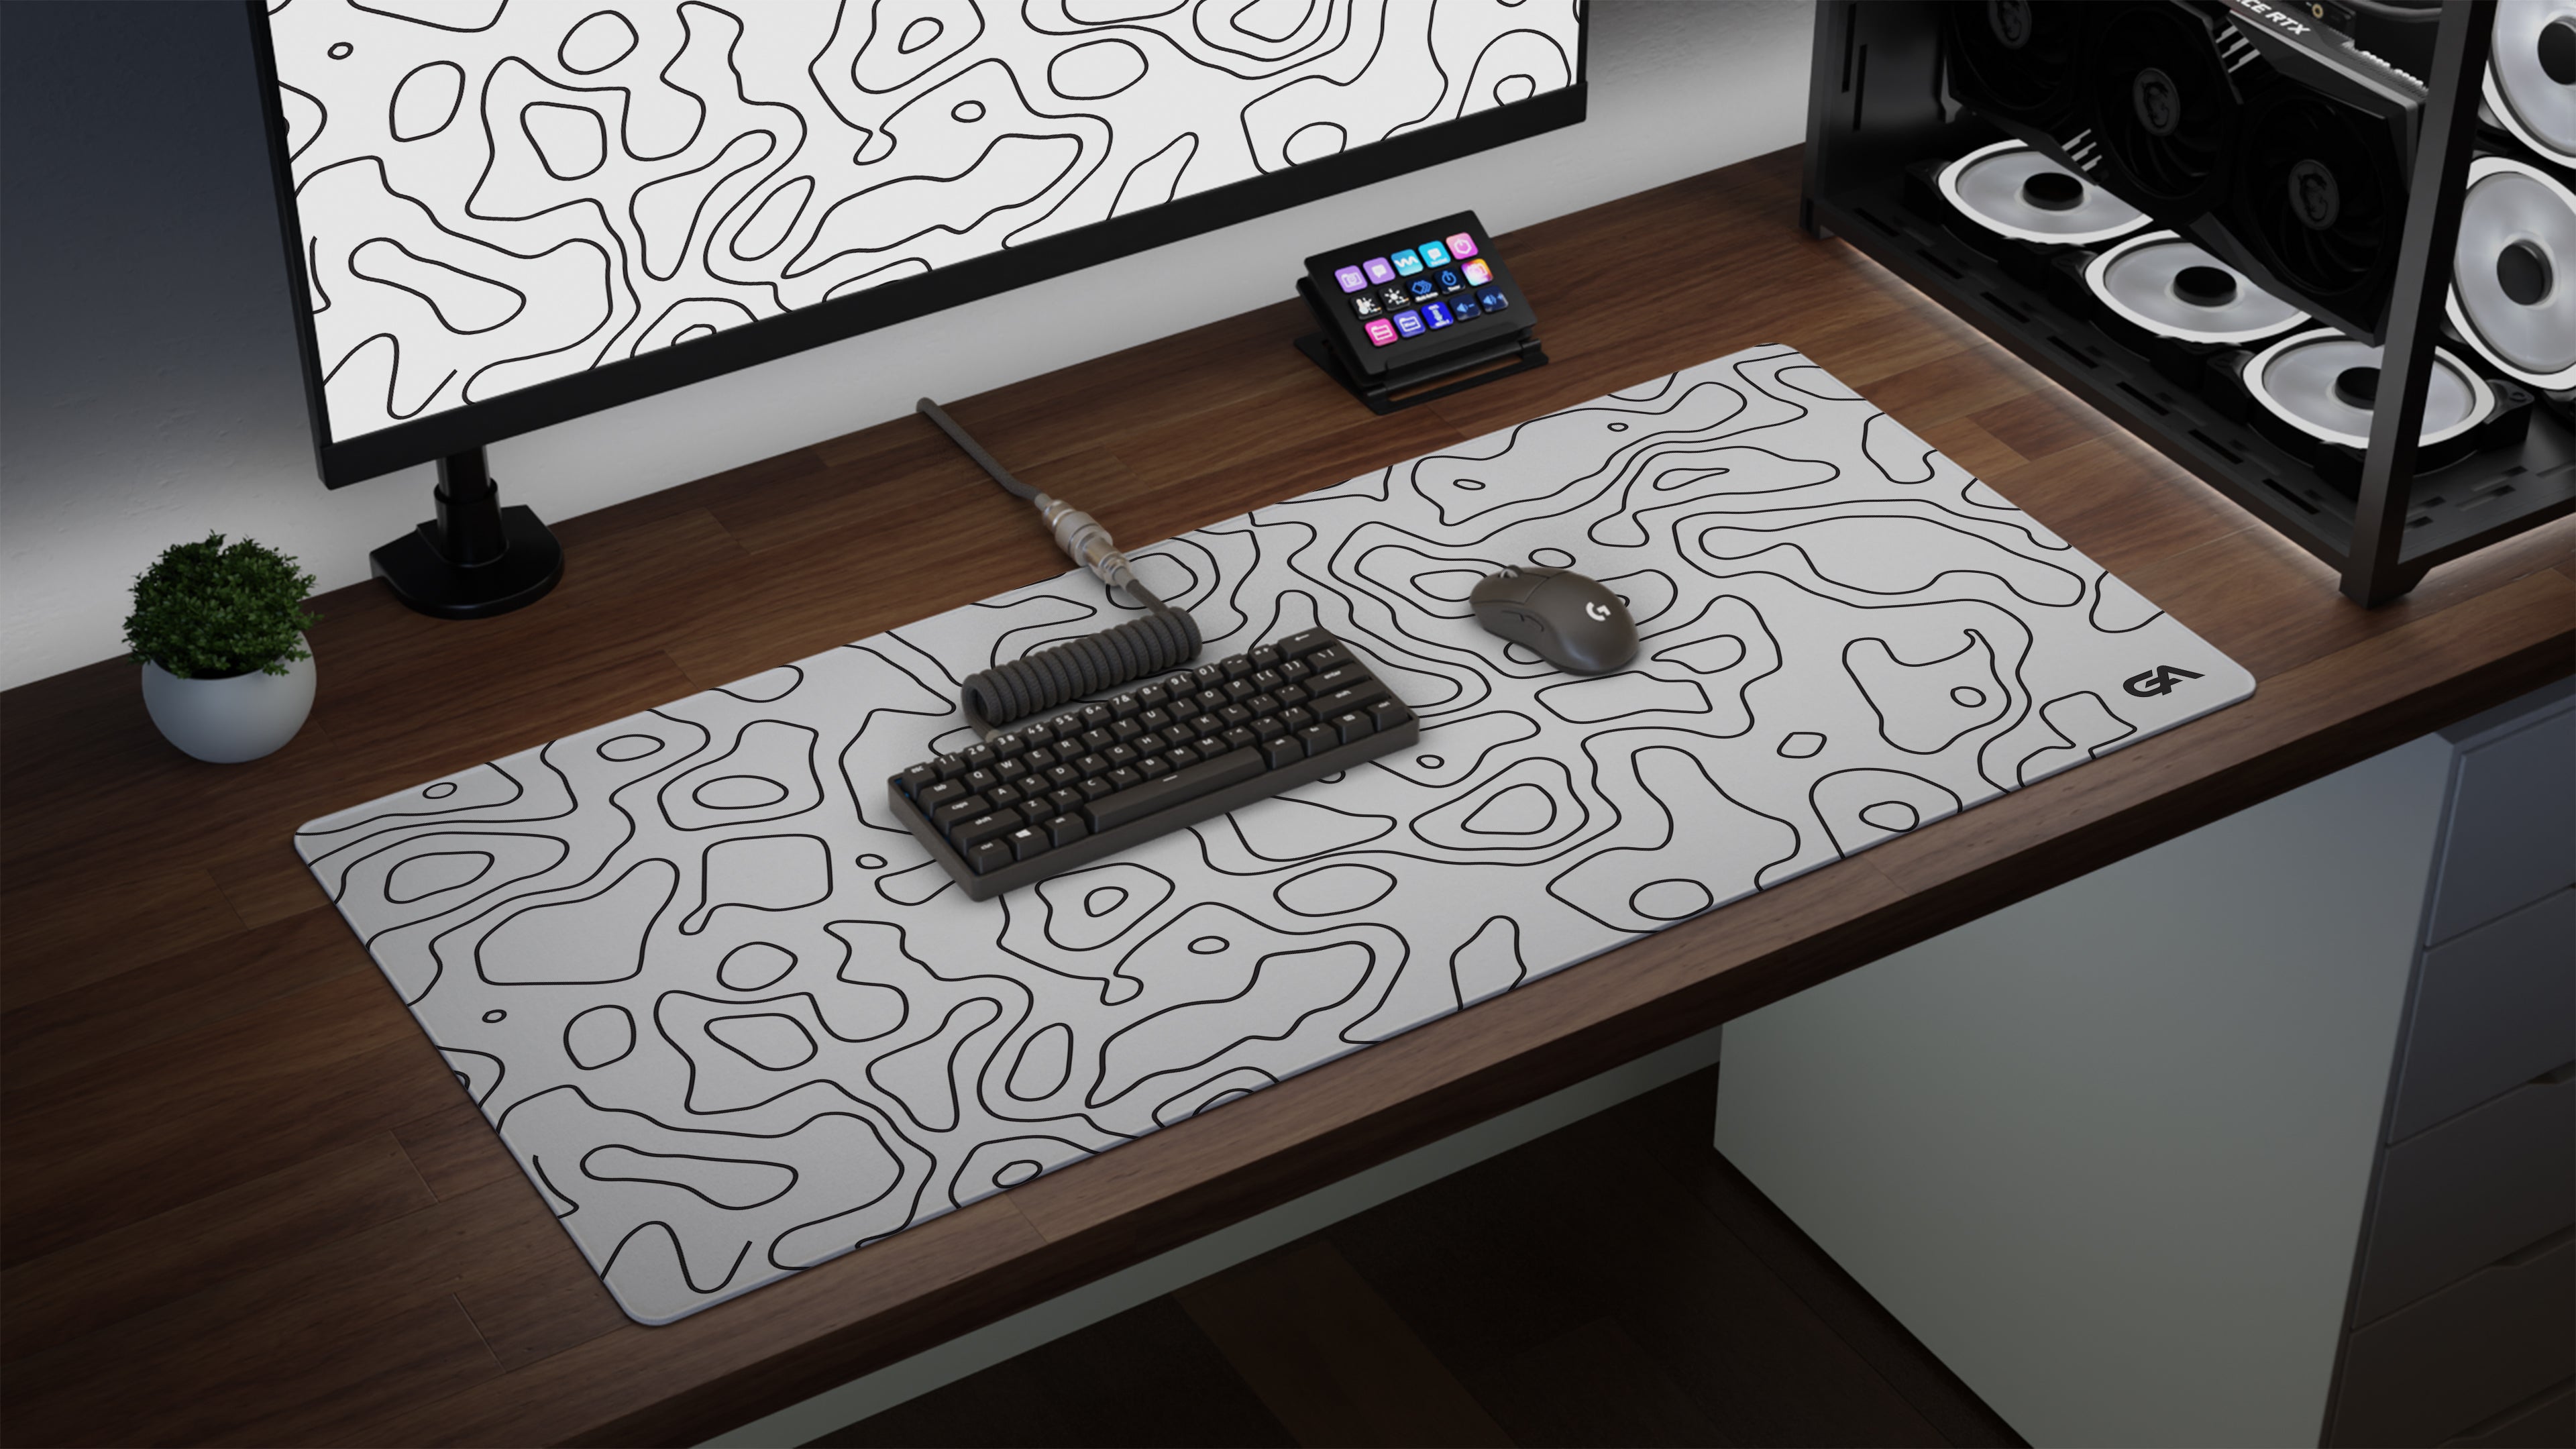 BLACK TOPO CANYON Mousepad Gamer Xxl Mouse Pad Speed Desk Mat